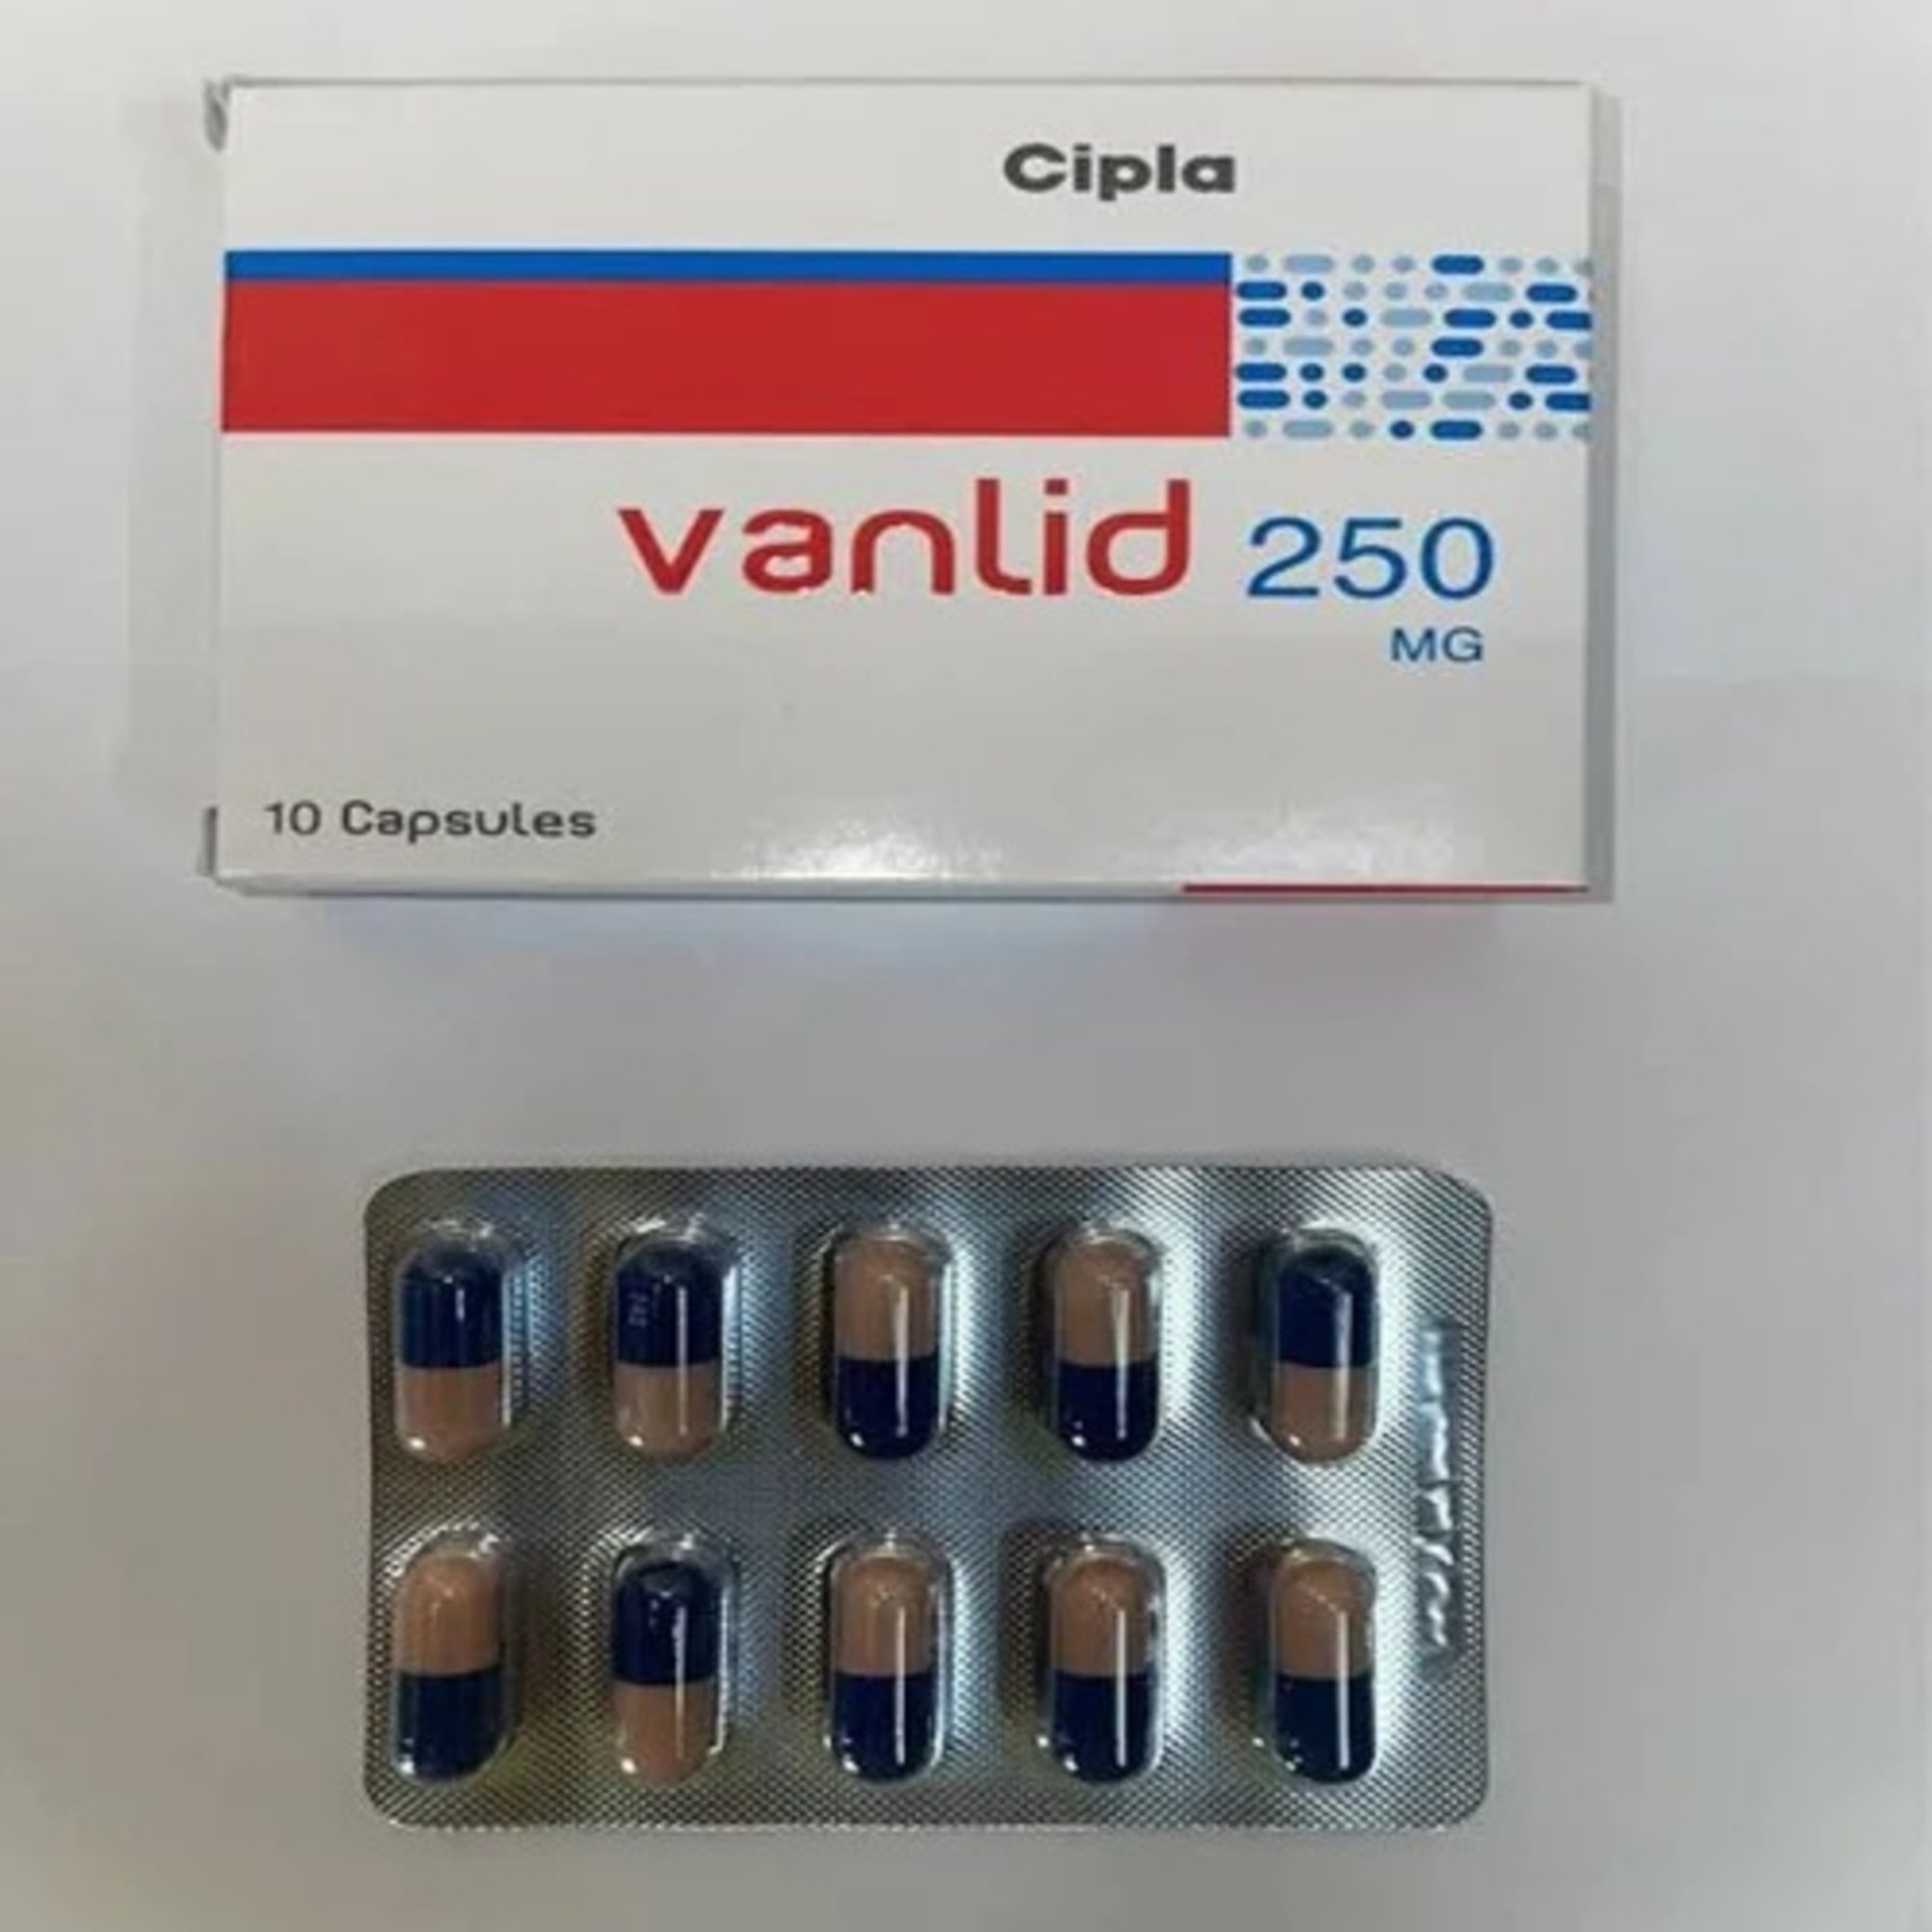 Vancomycin Hydrochloride Capsules